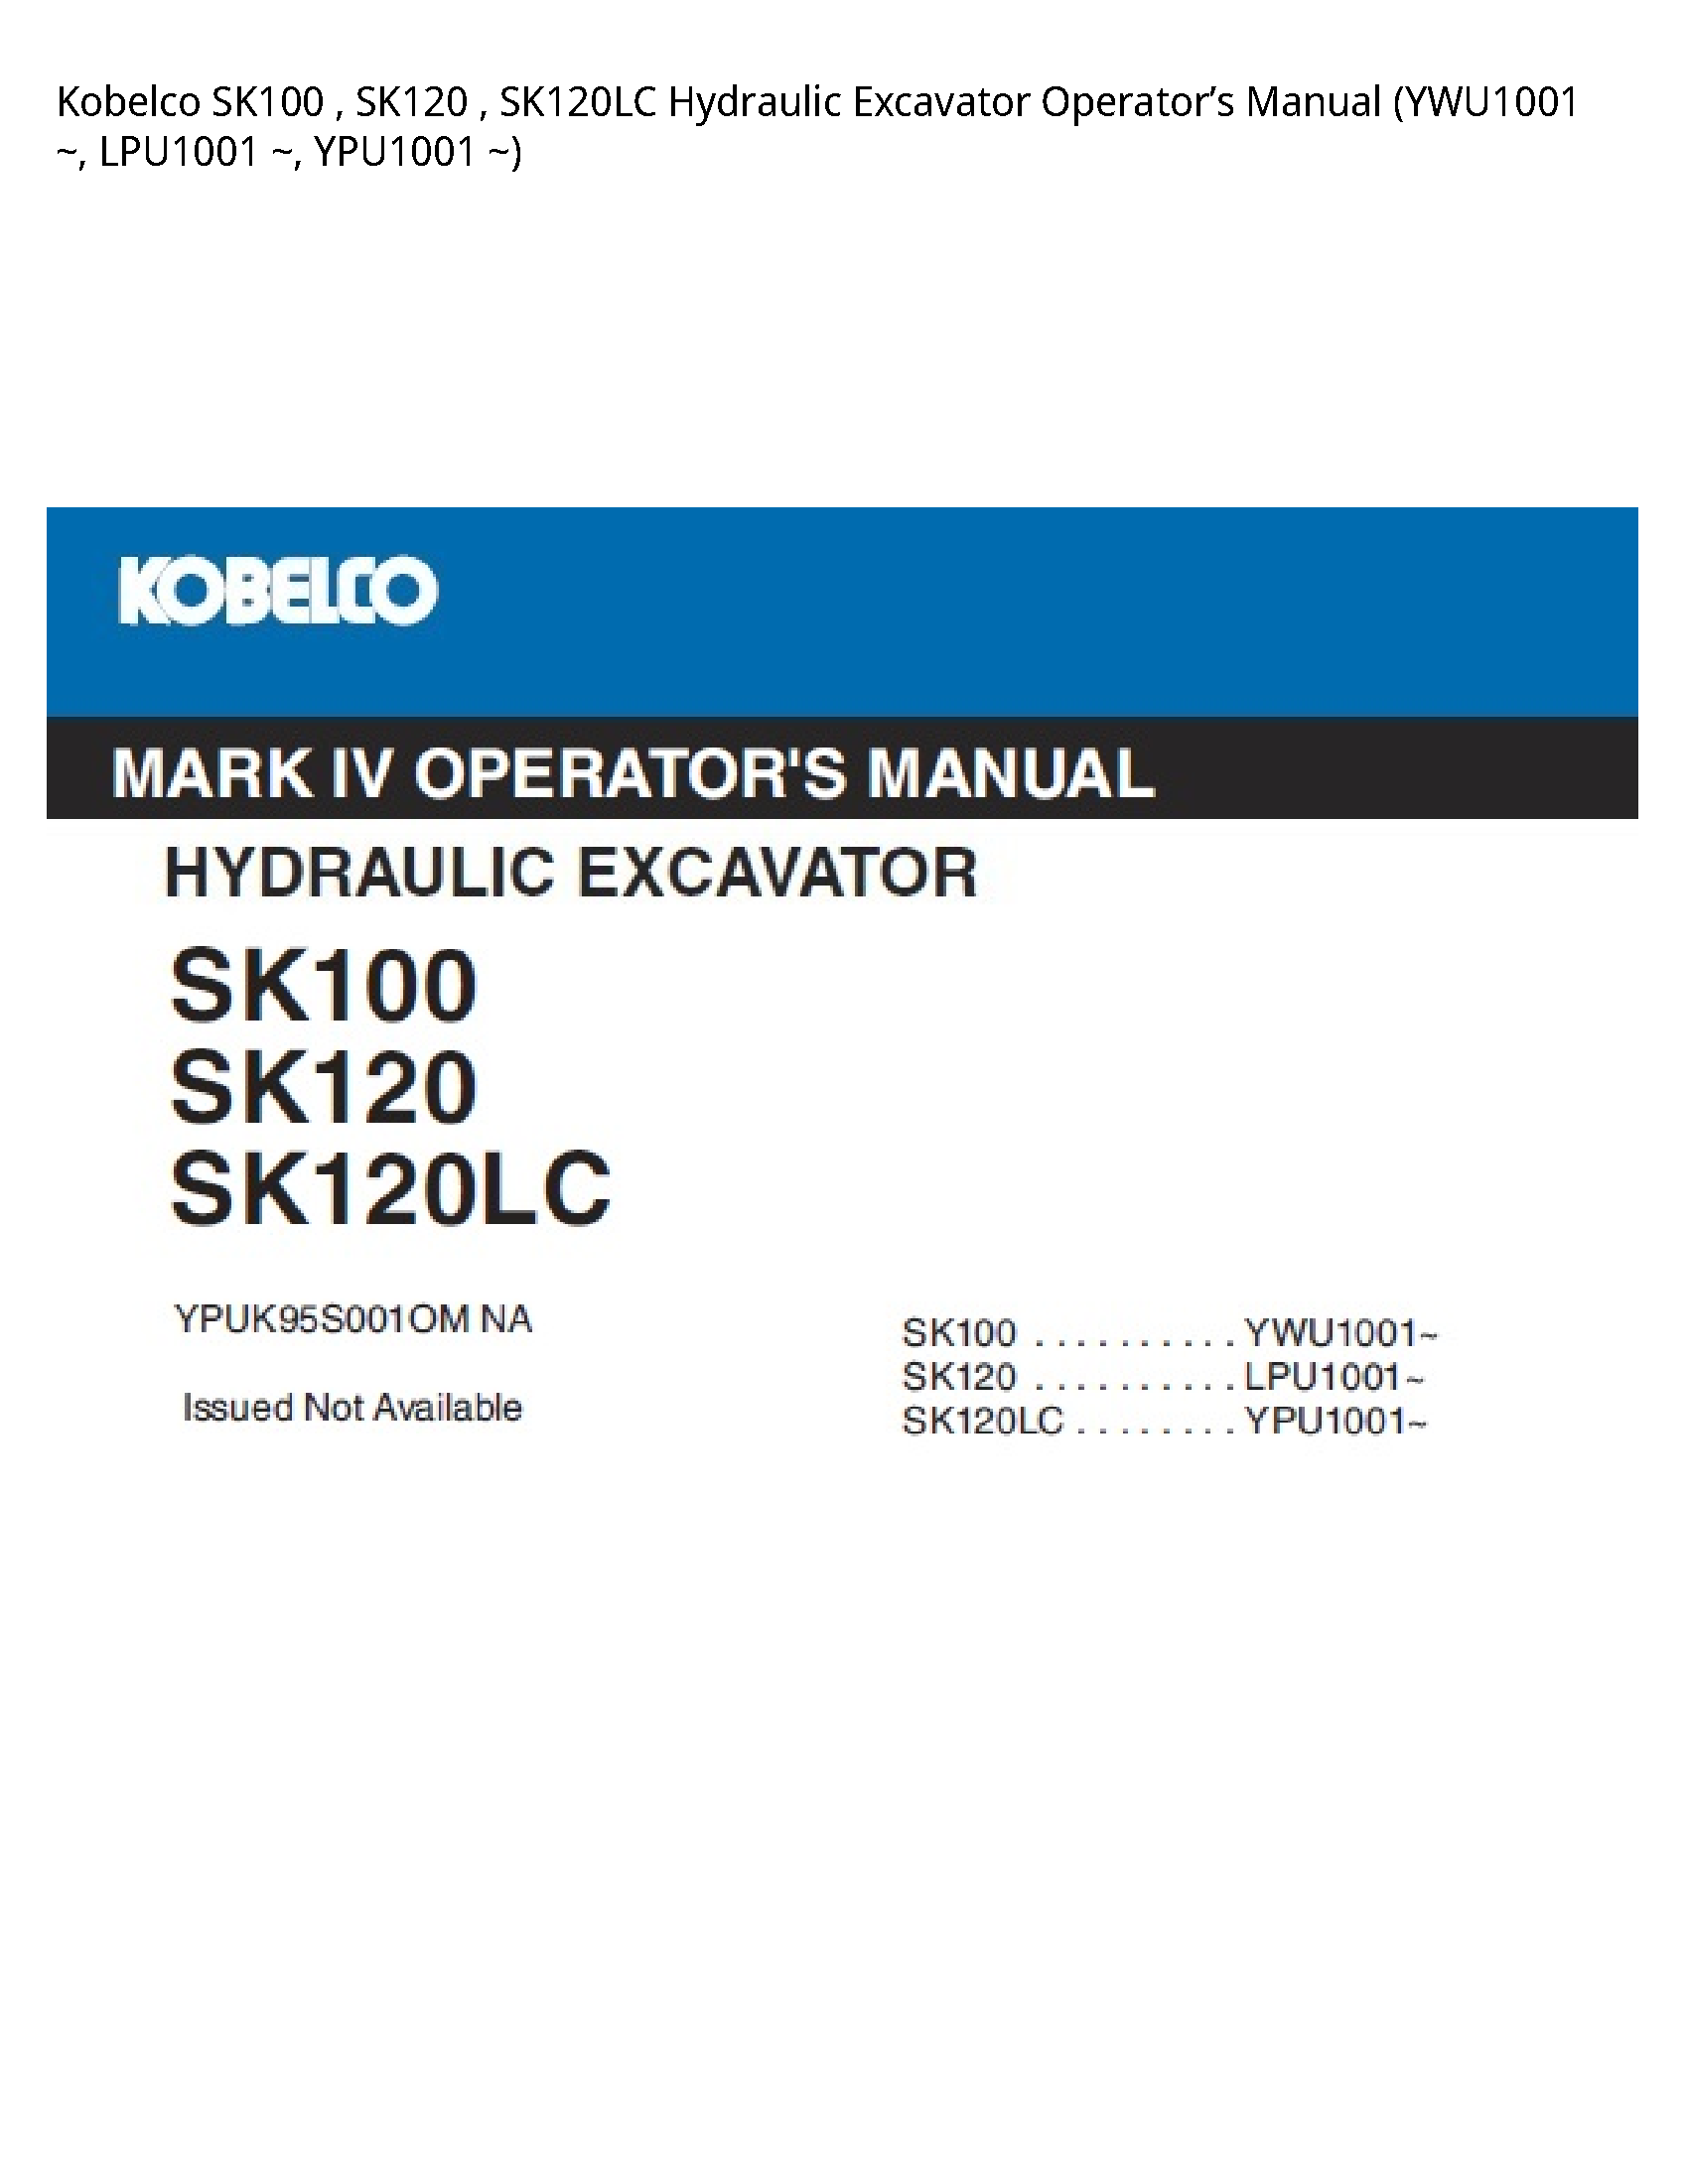 Kobelco SK100 Hydraulic Excavator Operator’s manual